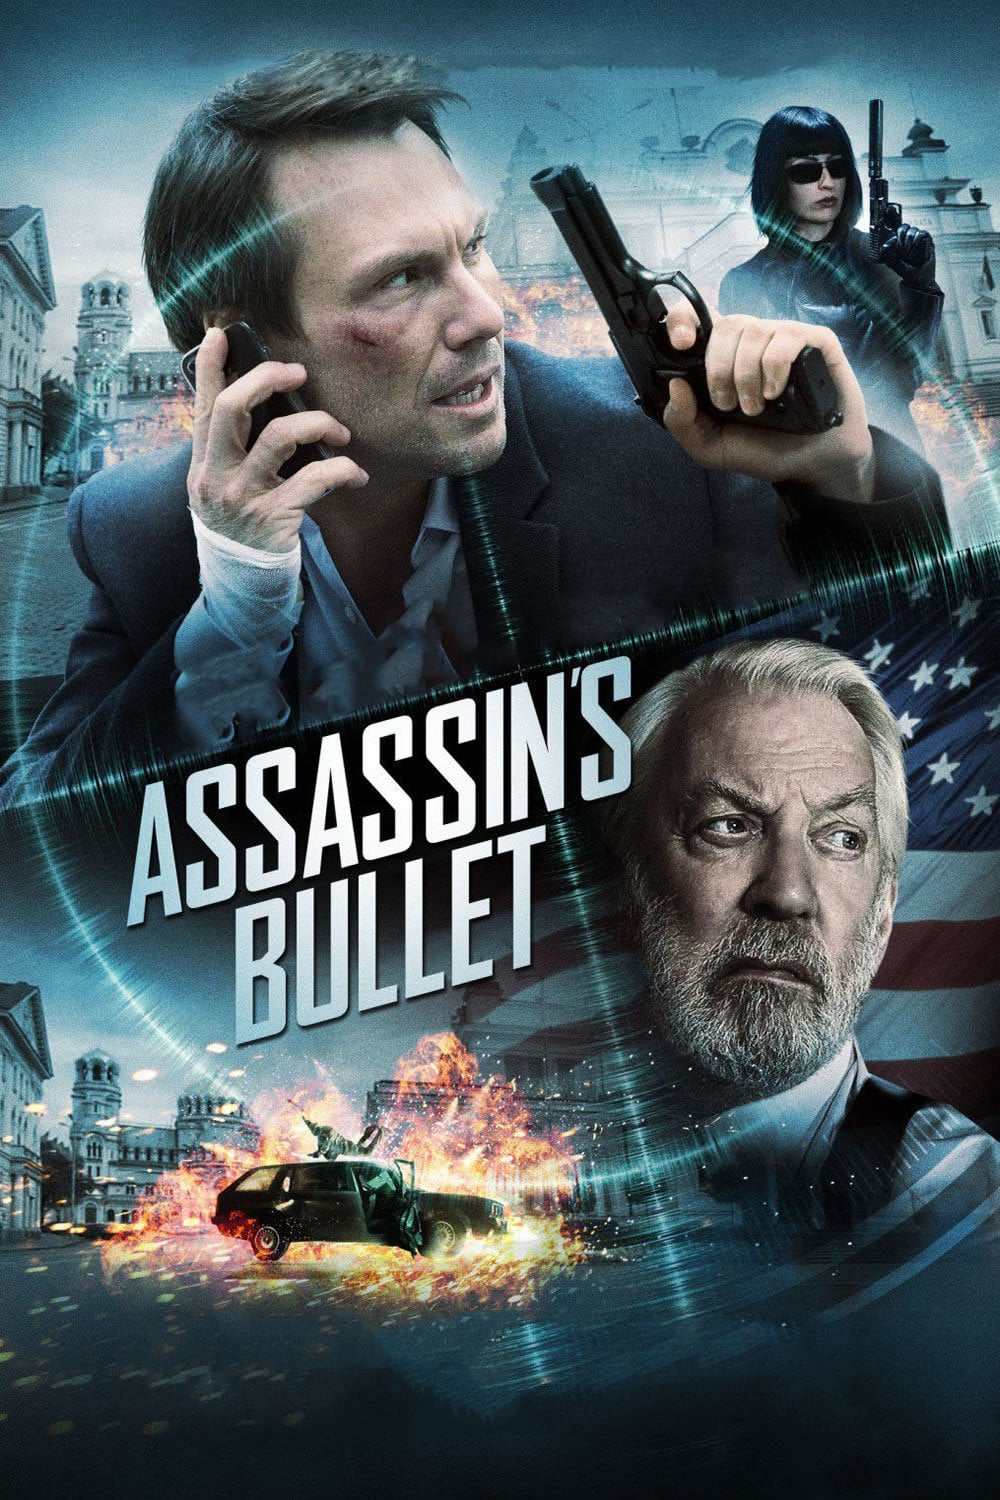 Plakat von "Assassin's Bullet"